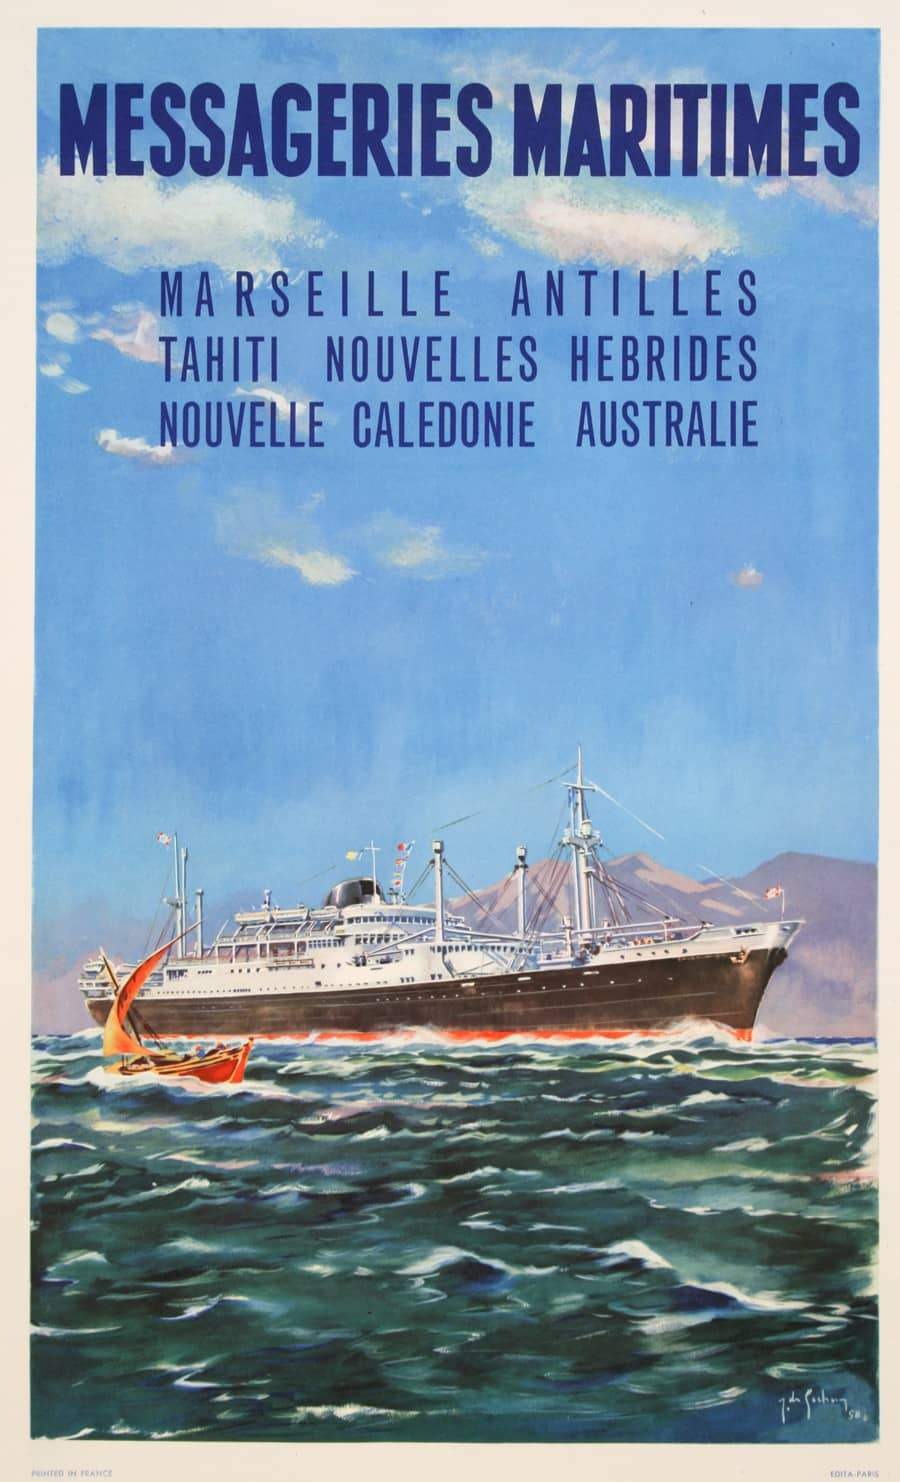 Messageries Maritimes Original Poster by Gachons - Marseille Antilles c1950